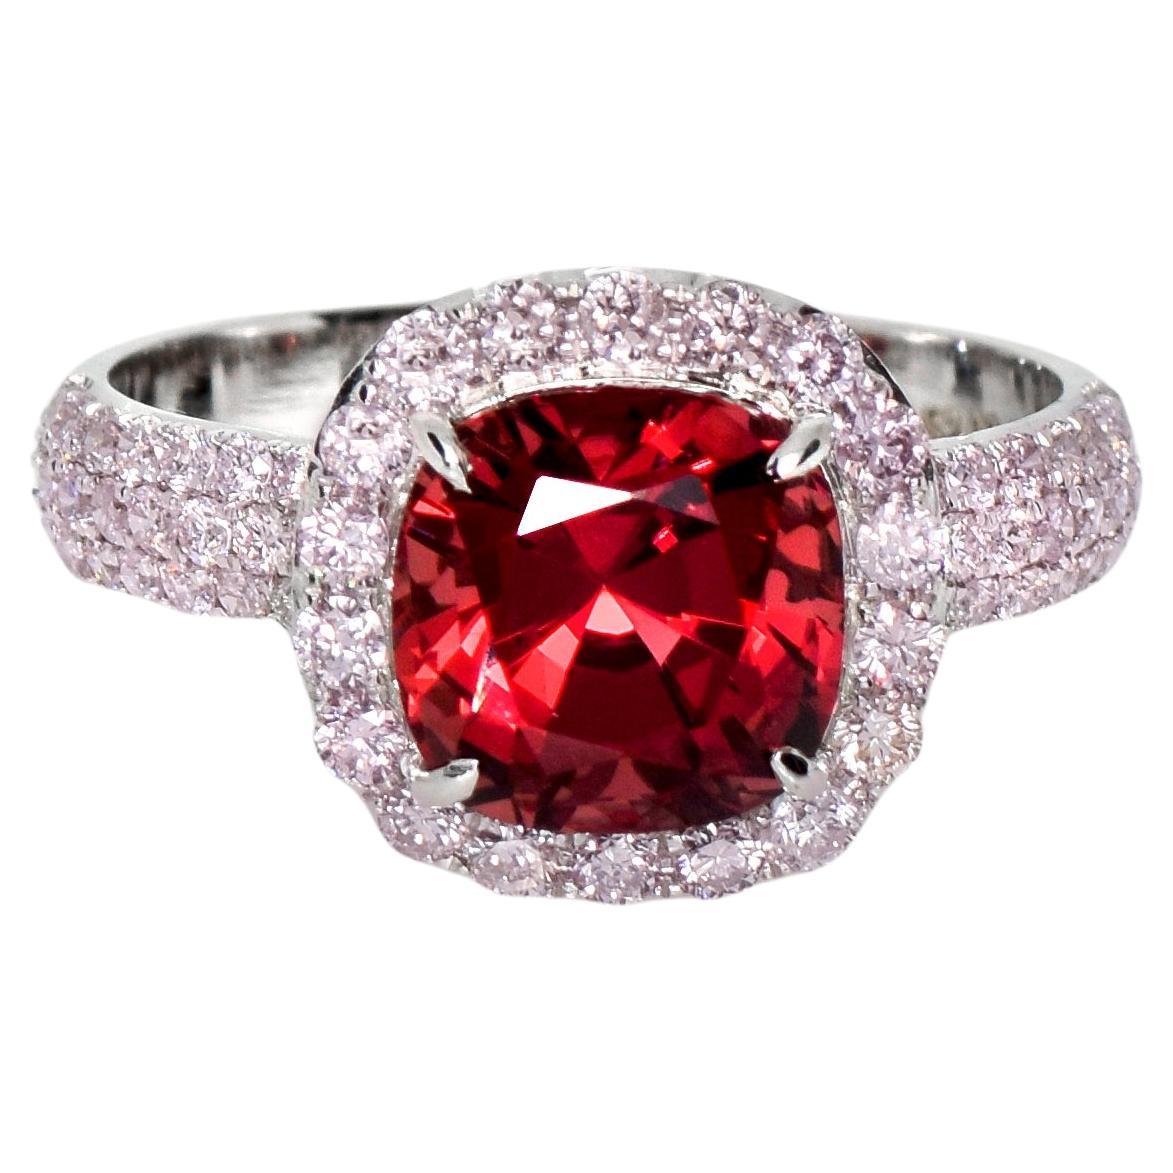 IGI 18K 3.09 Ct Red Spinel&Pink Diamonds Antique Engagement Ring For Sale